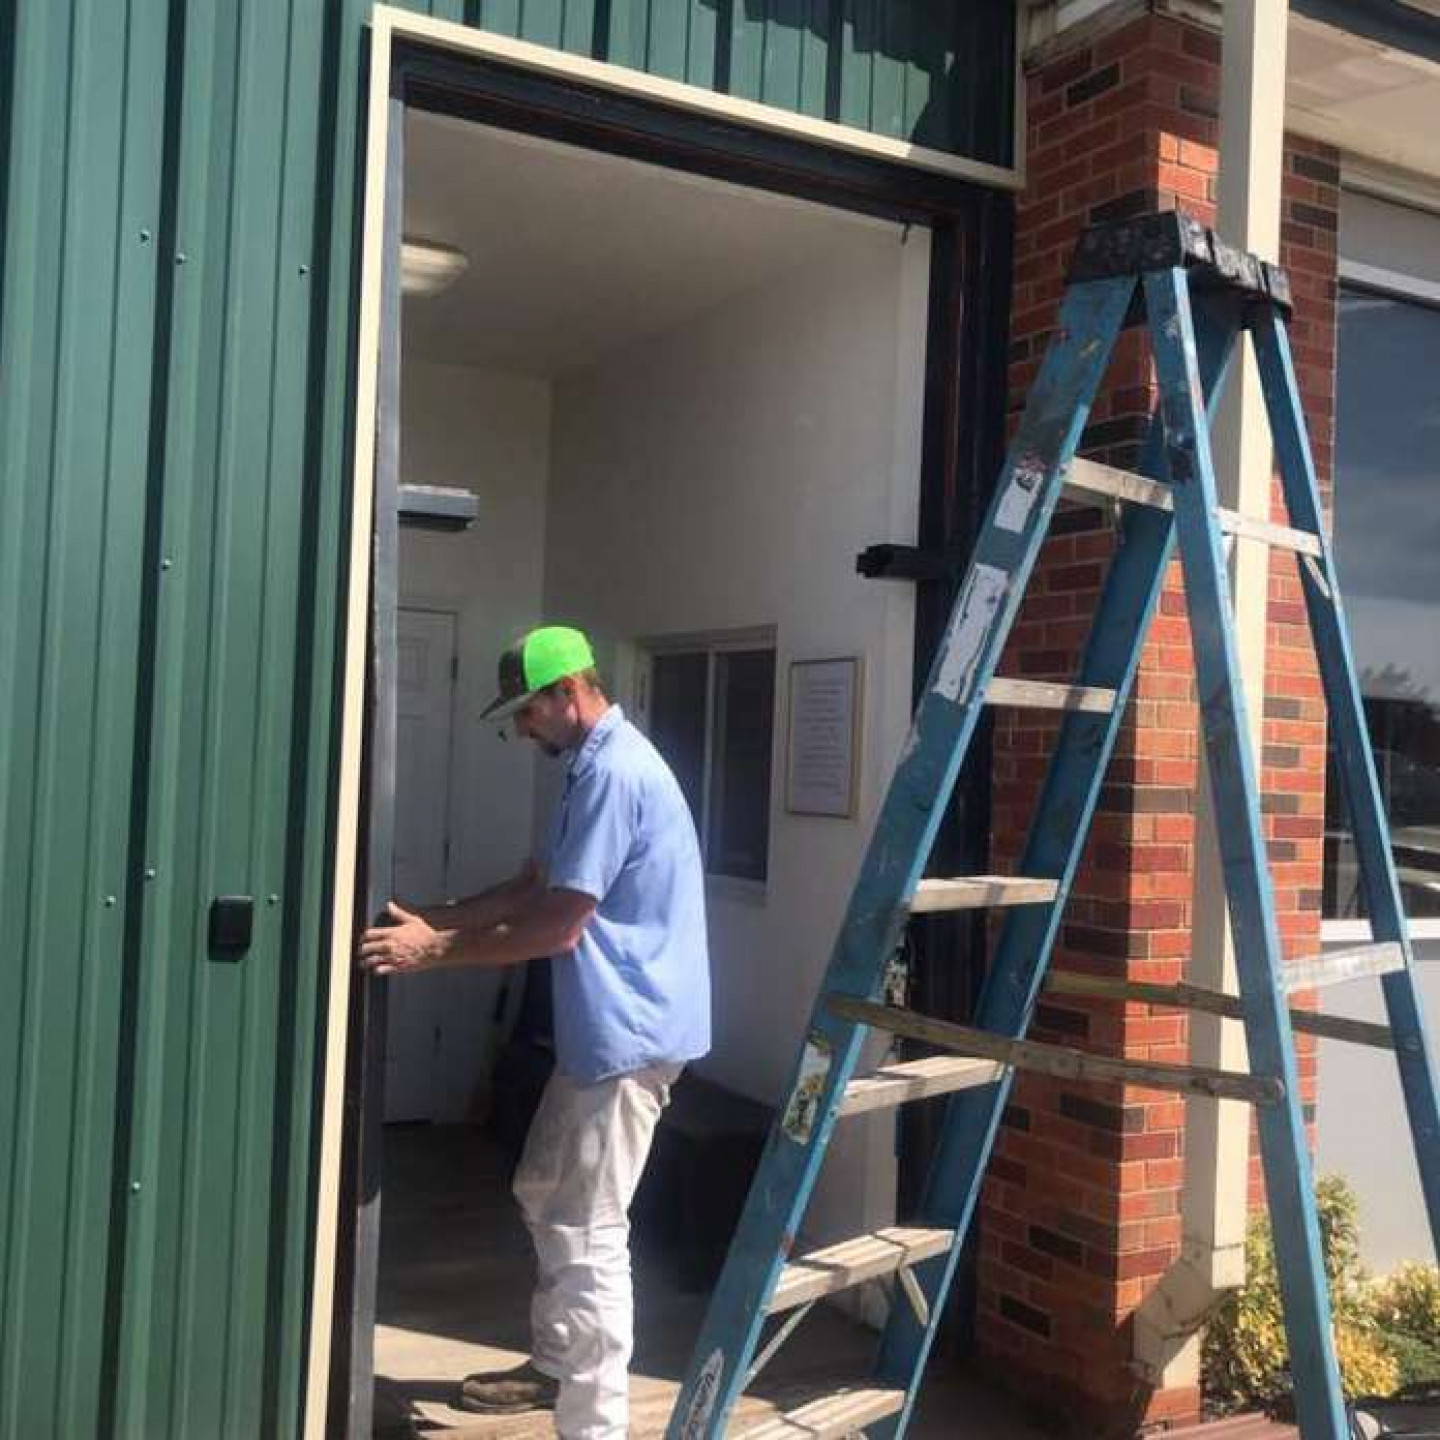 A door technician installing a door frame on a green metal building